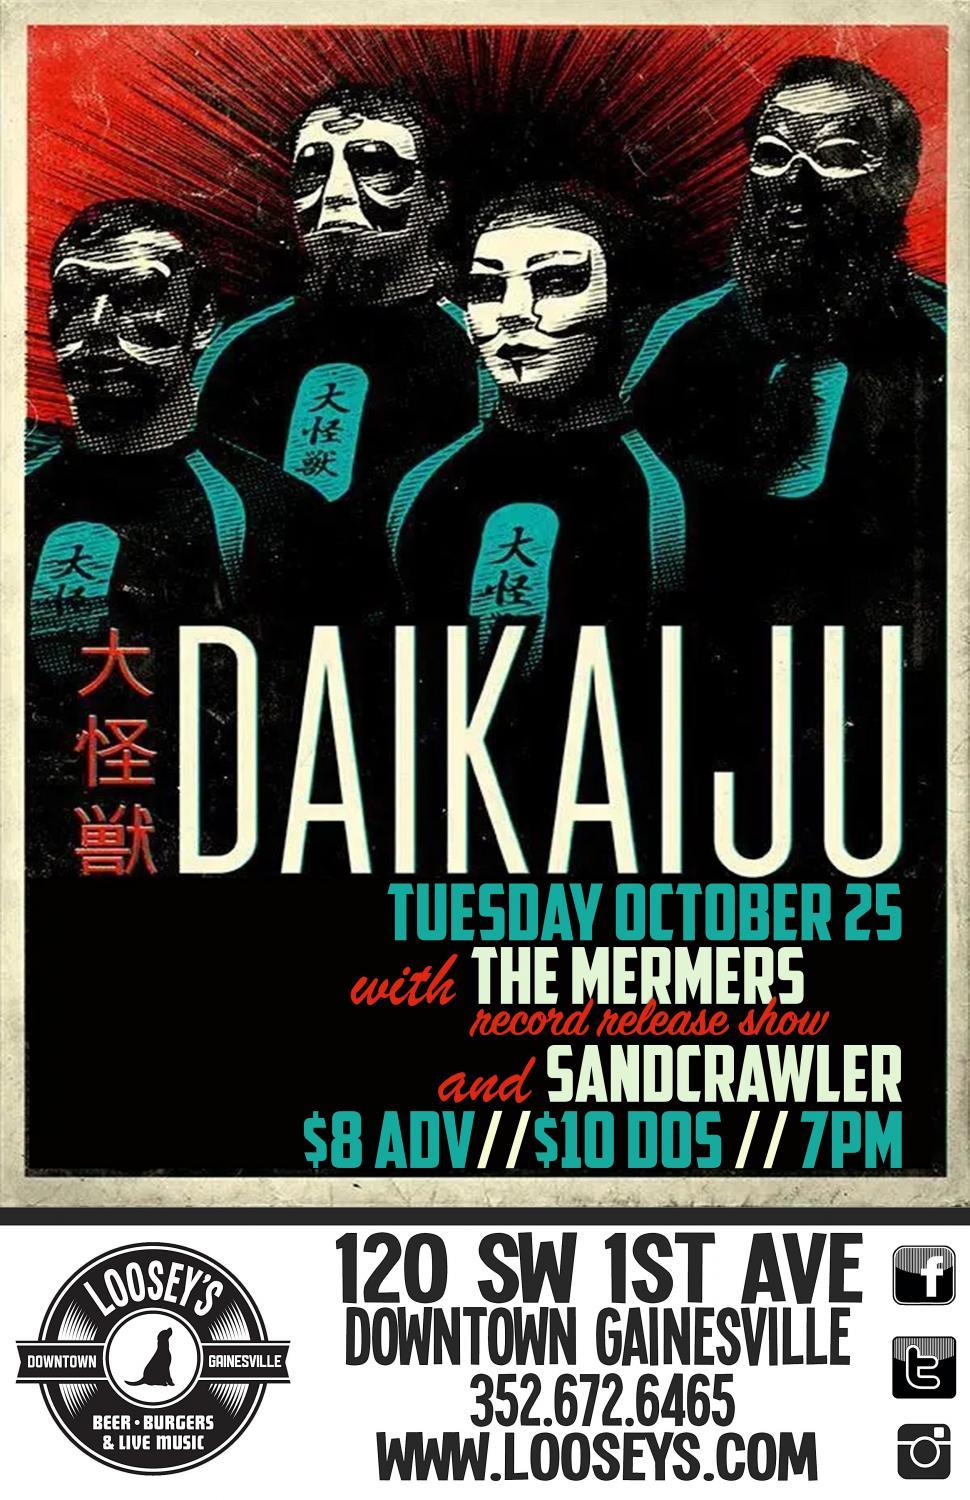 Daikaiju // The Mermers // Sandcrawler
Tue Oct 25, 7:00 PM - Tue Oct 25, 11:00 PM
in 6 days